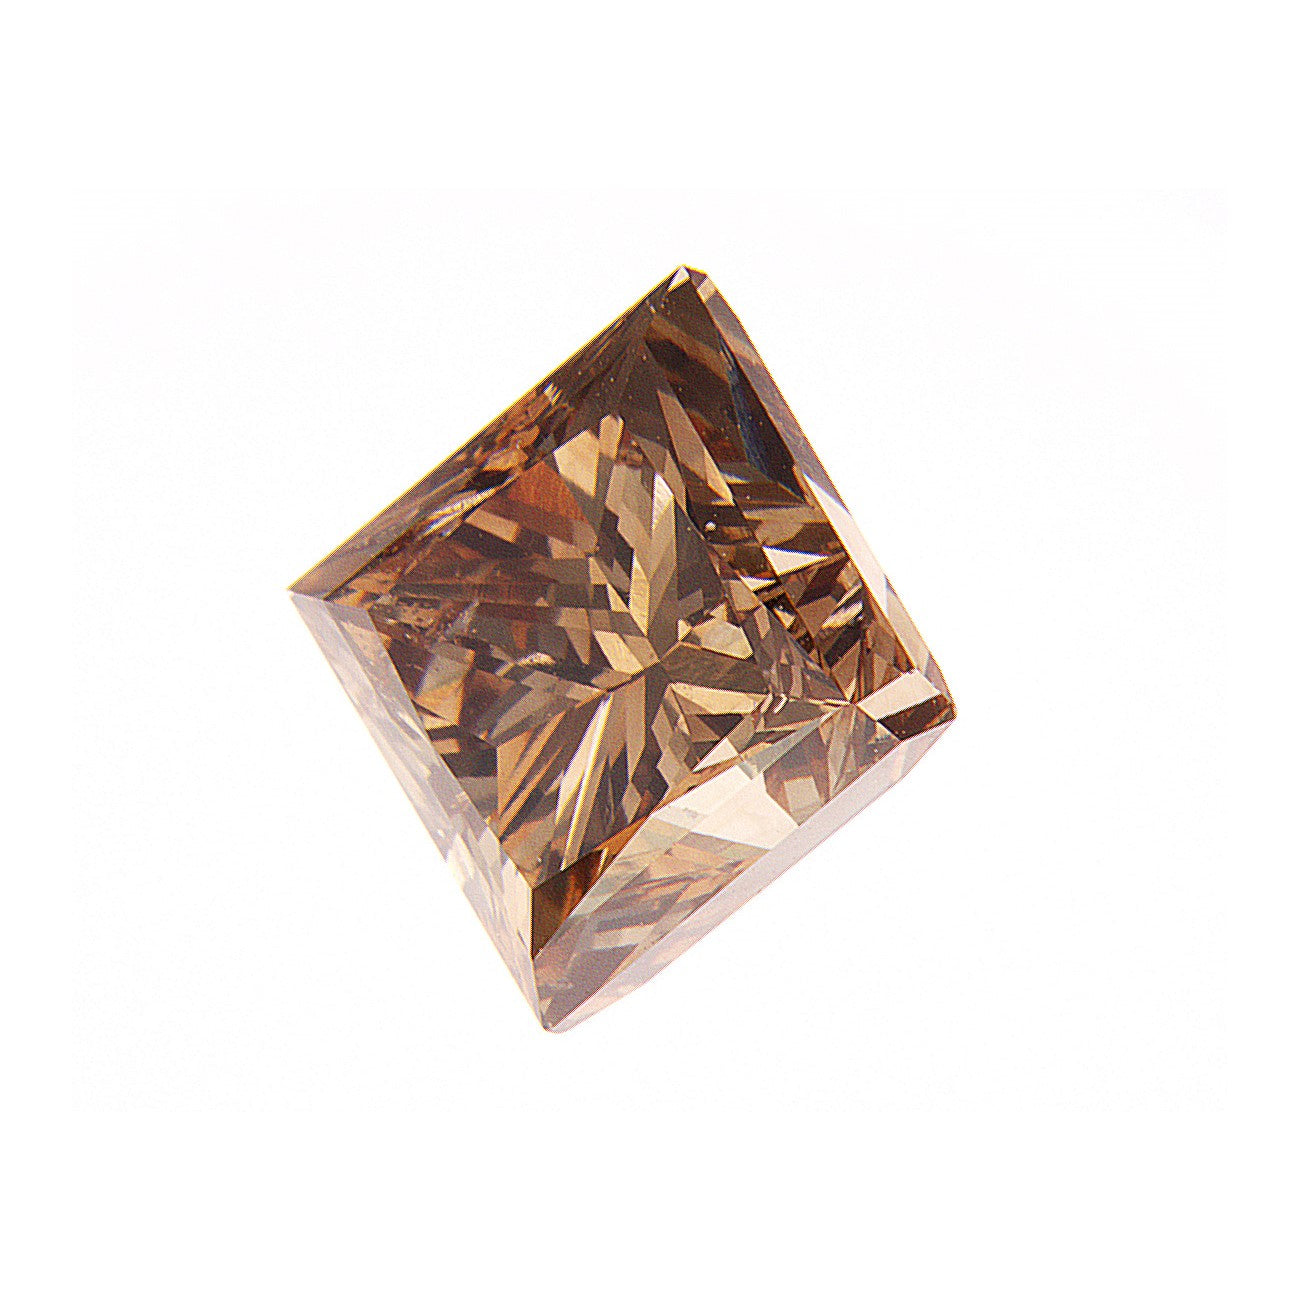 3.02ct Fancy Deep Brown, Princess Cut Diamond, SI1 - 7.38 x 7.24 x 6.31mm